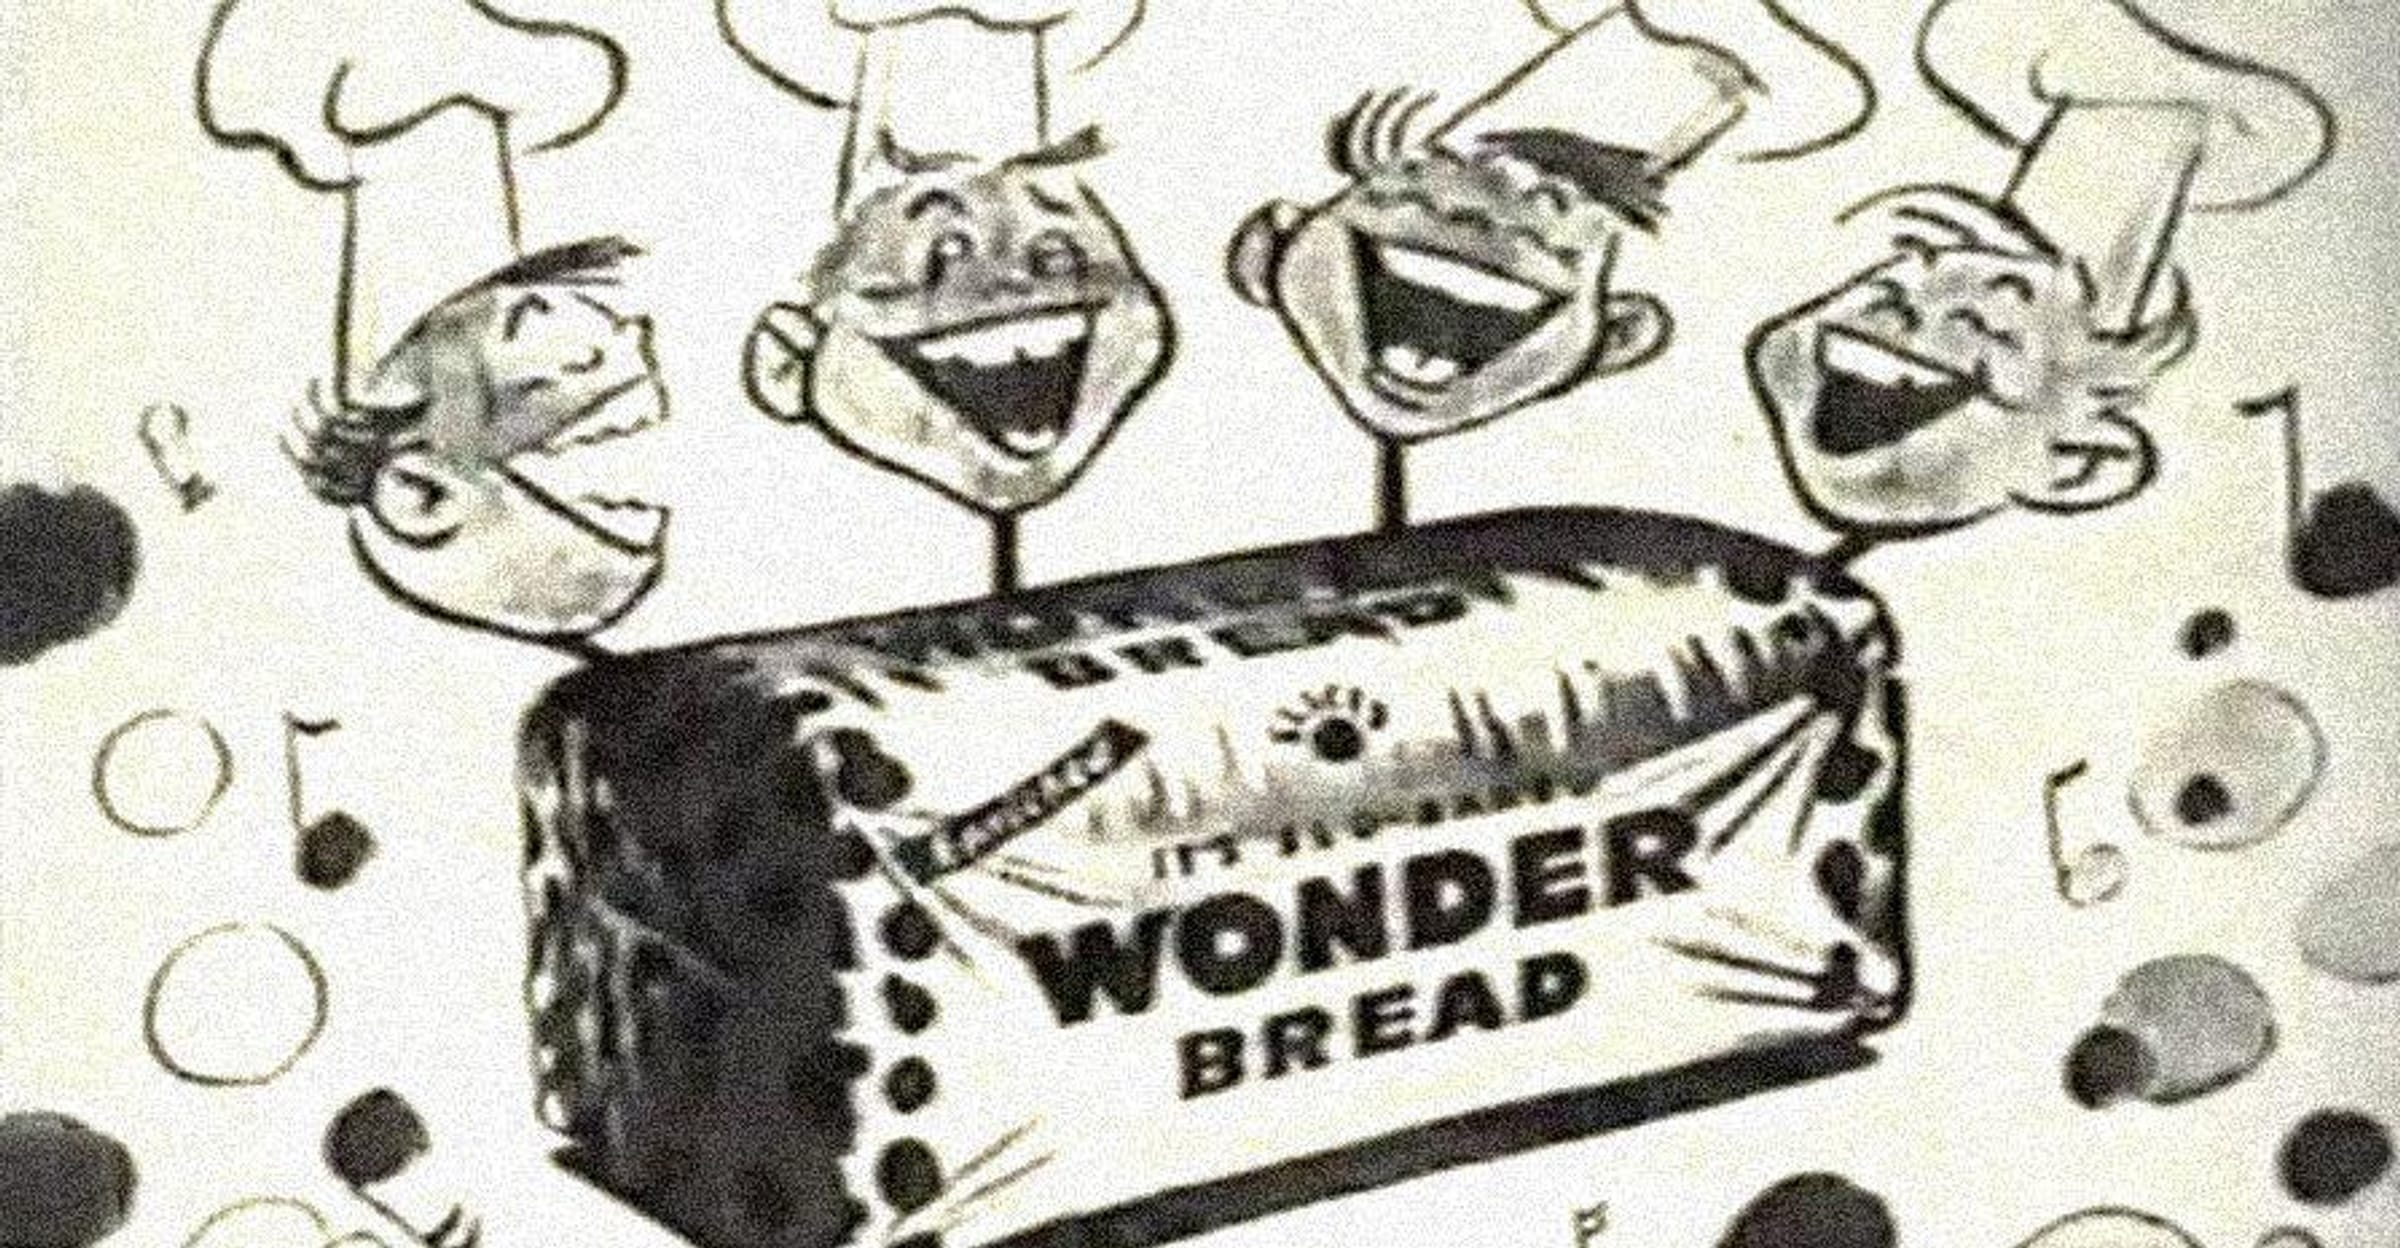 man wonder bread 1960